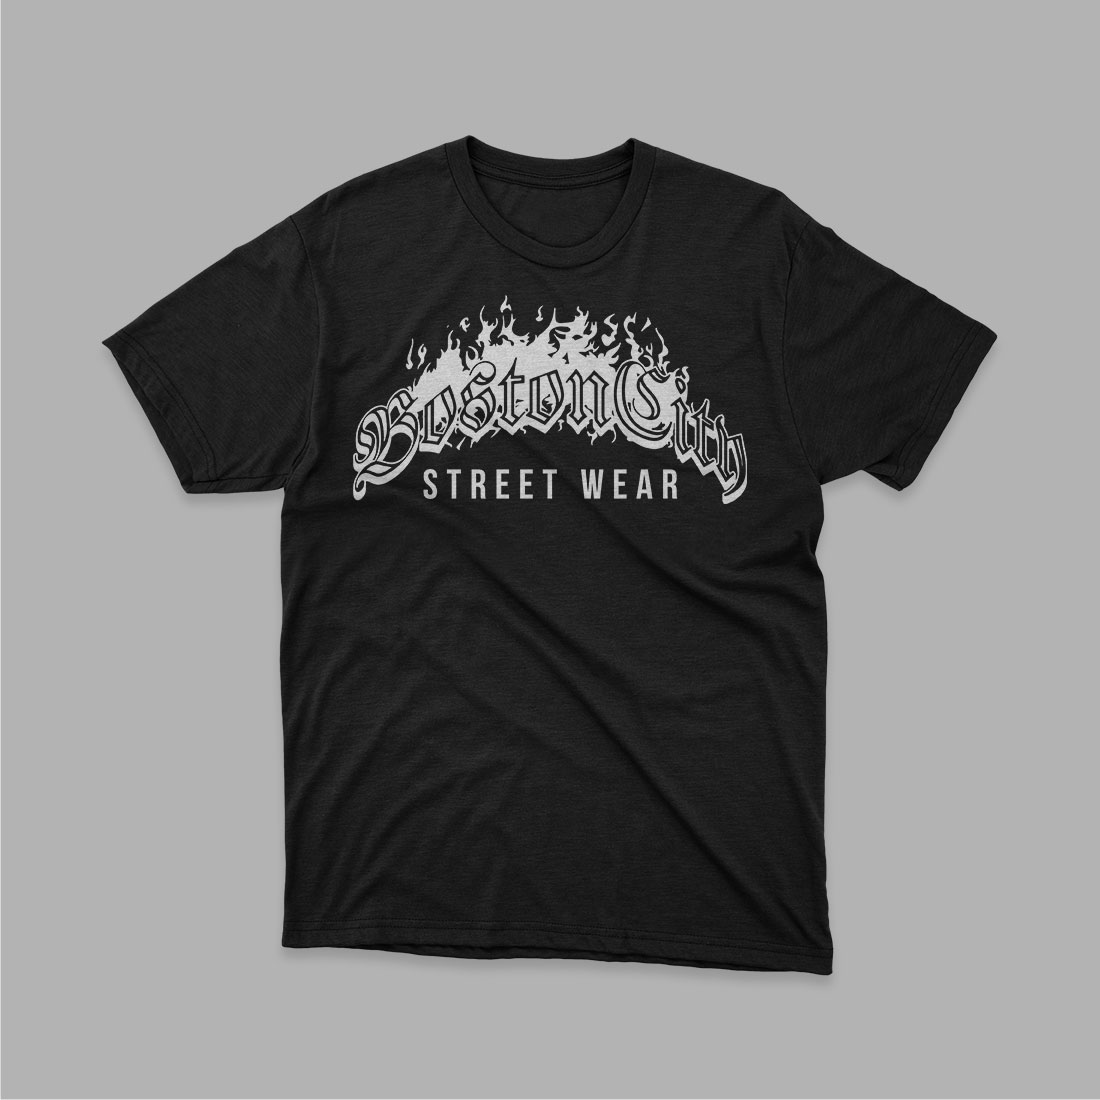 Boston City Fire Street Wear T Shirt Design cover image.